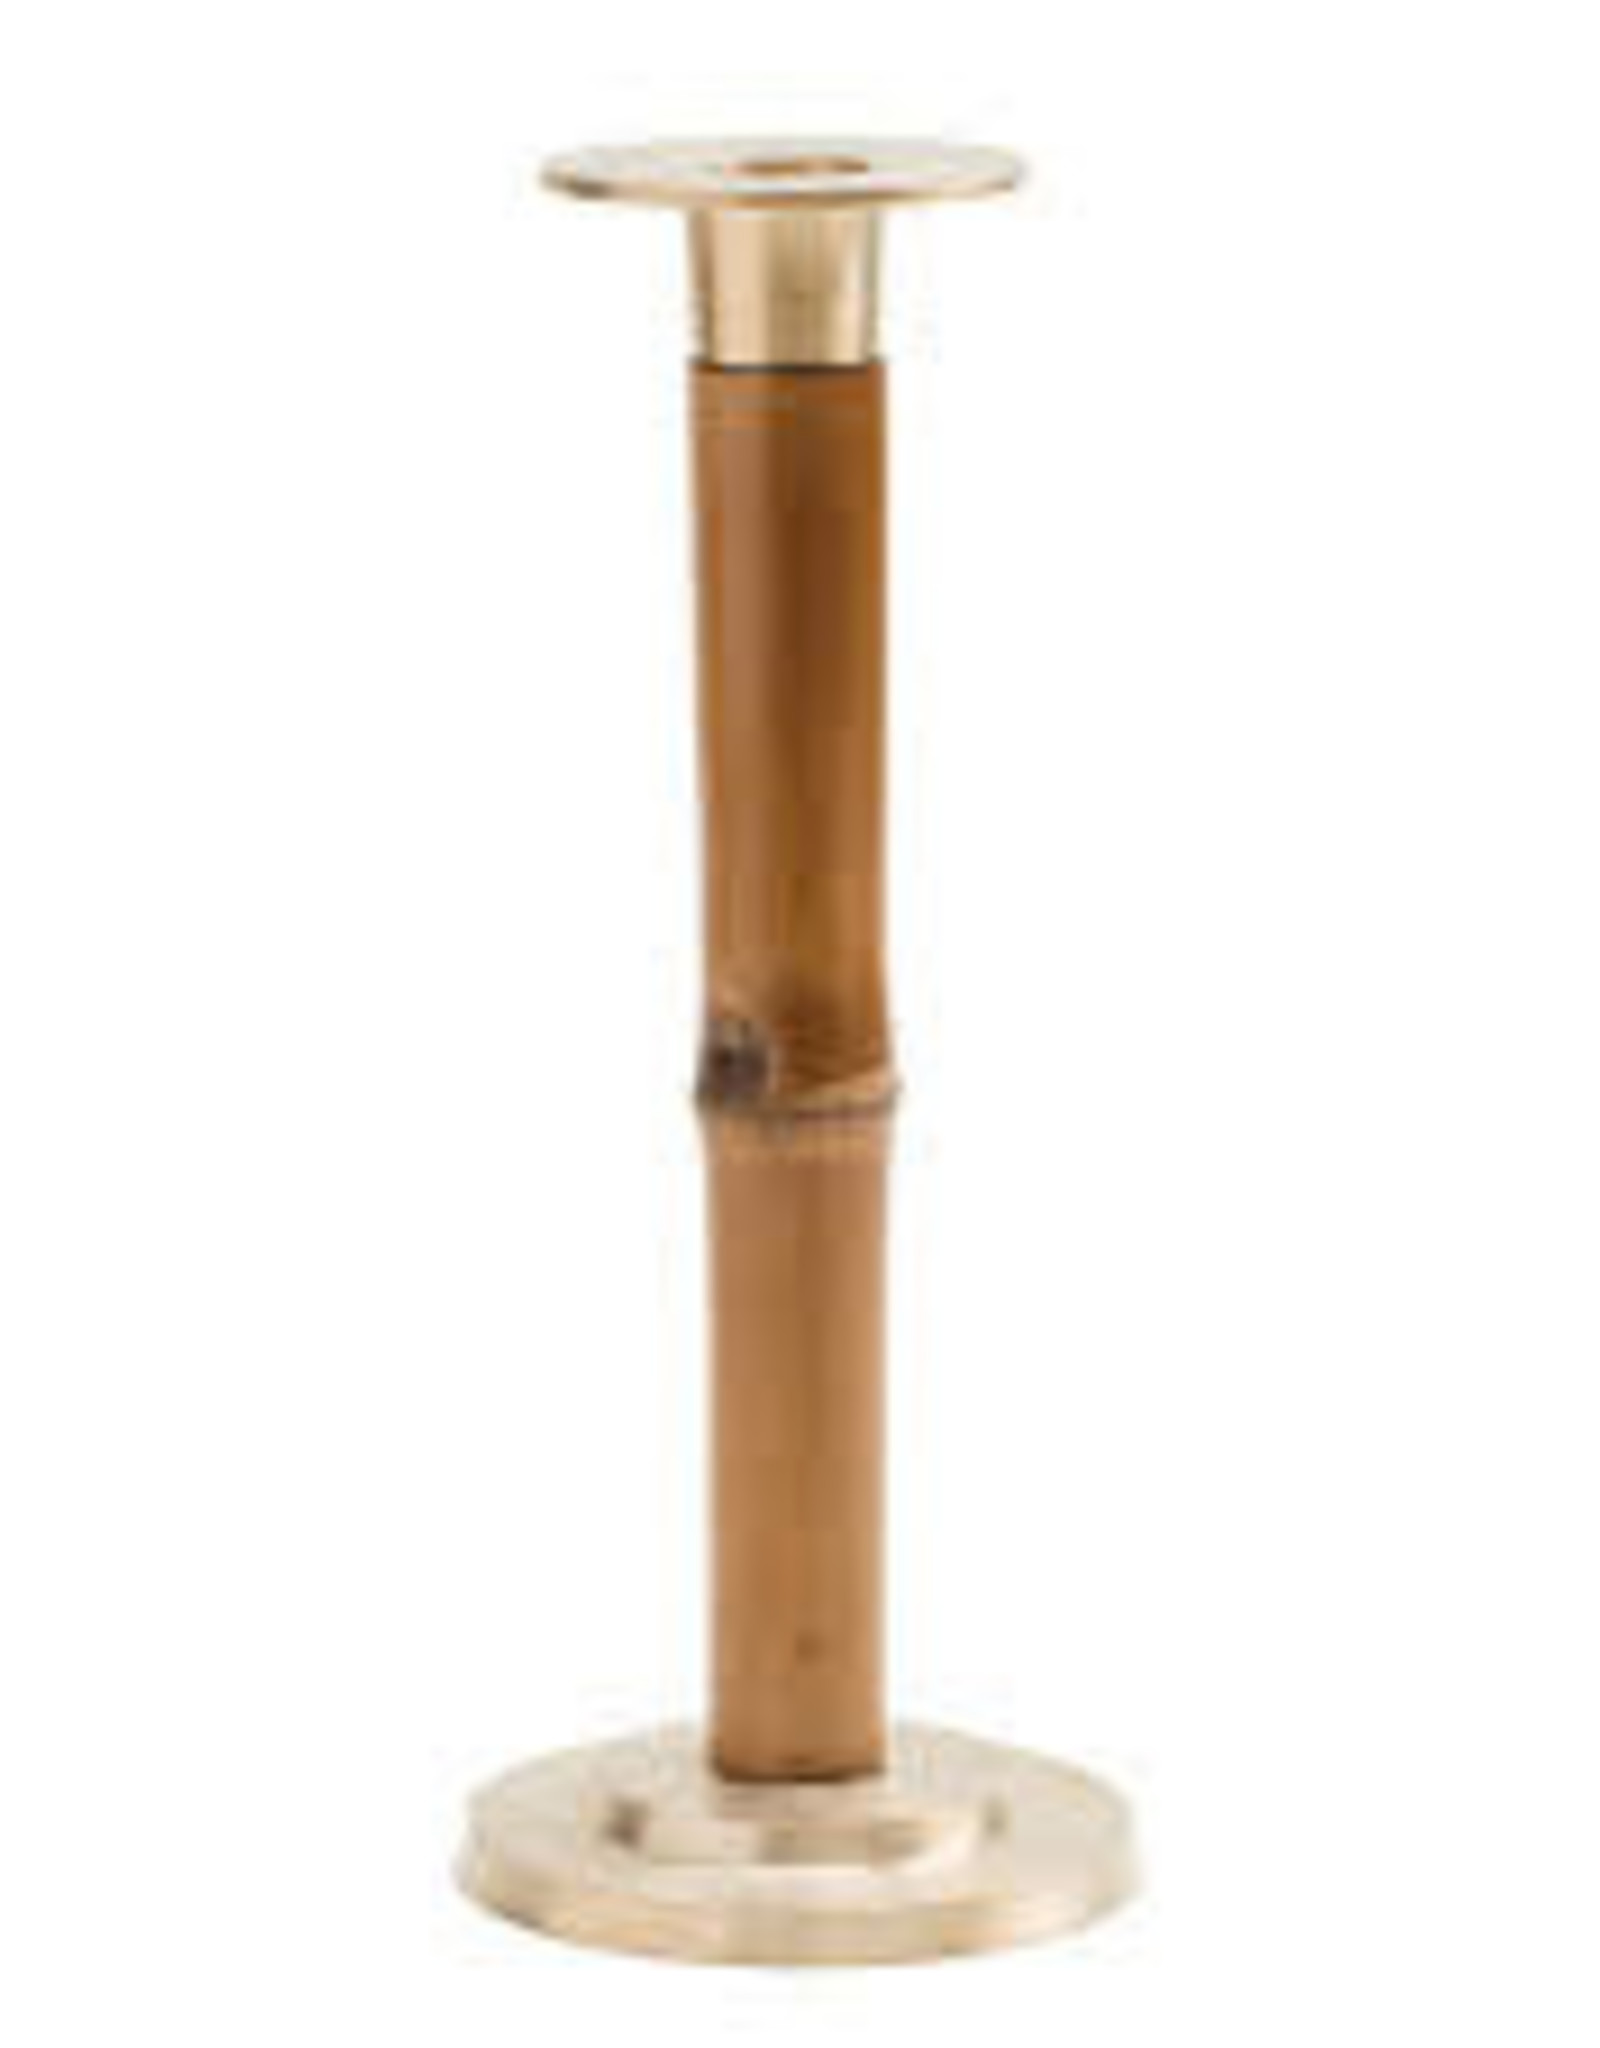 Caspari Light Brown Small Bamboo and Brass Candlestick - 7"